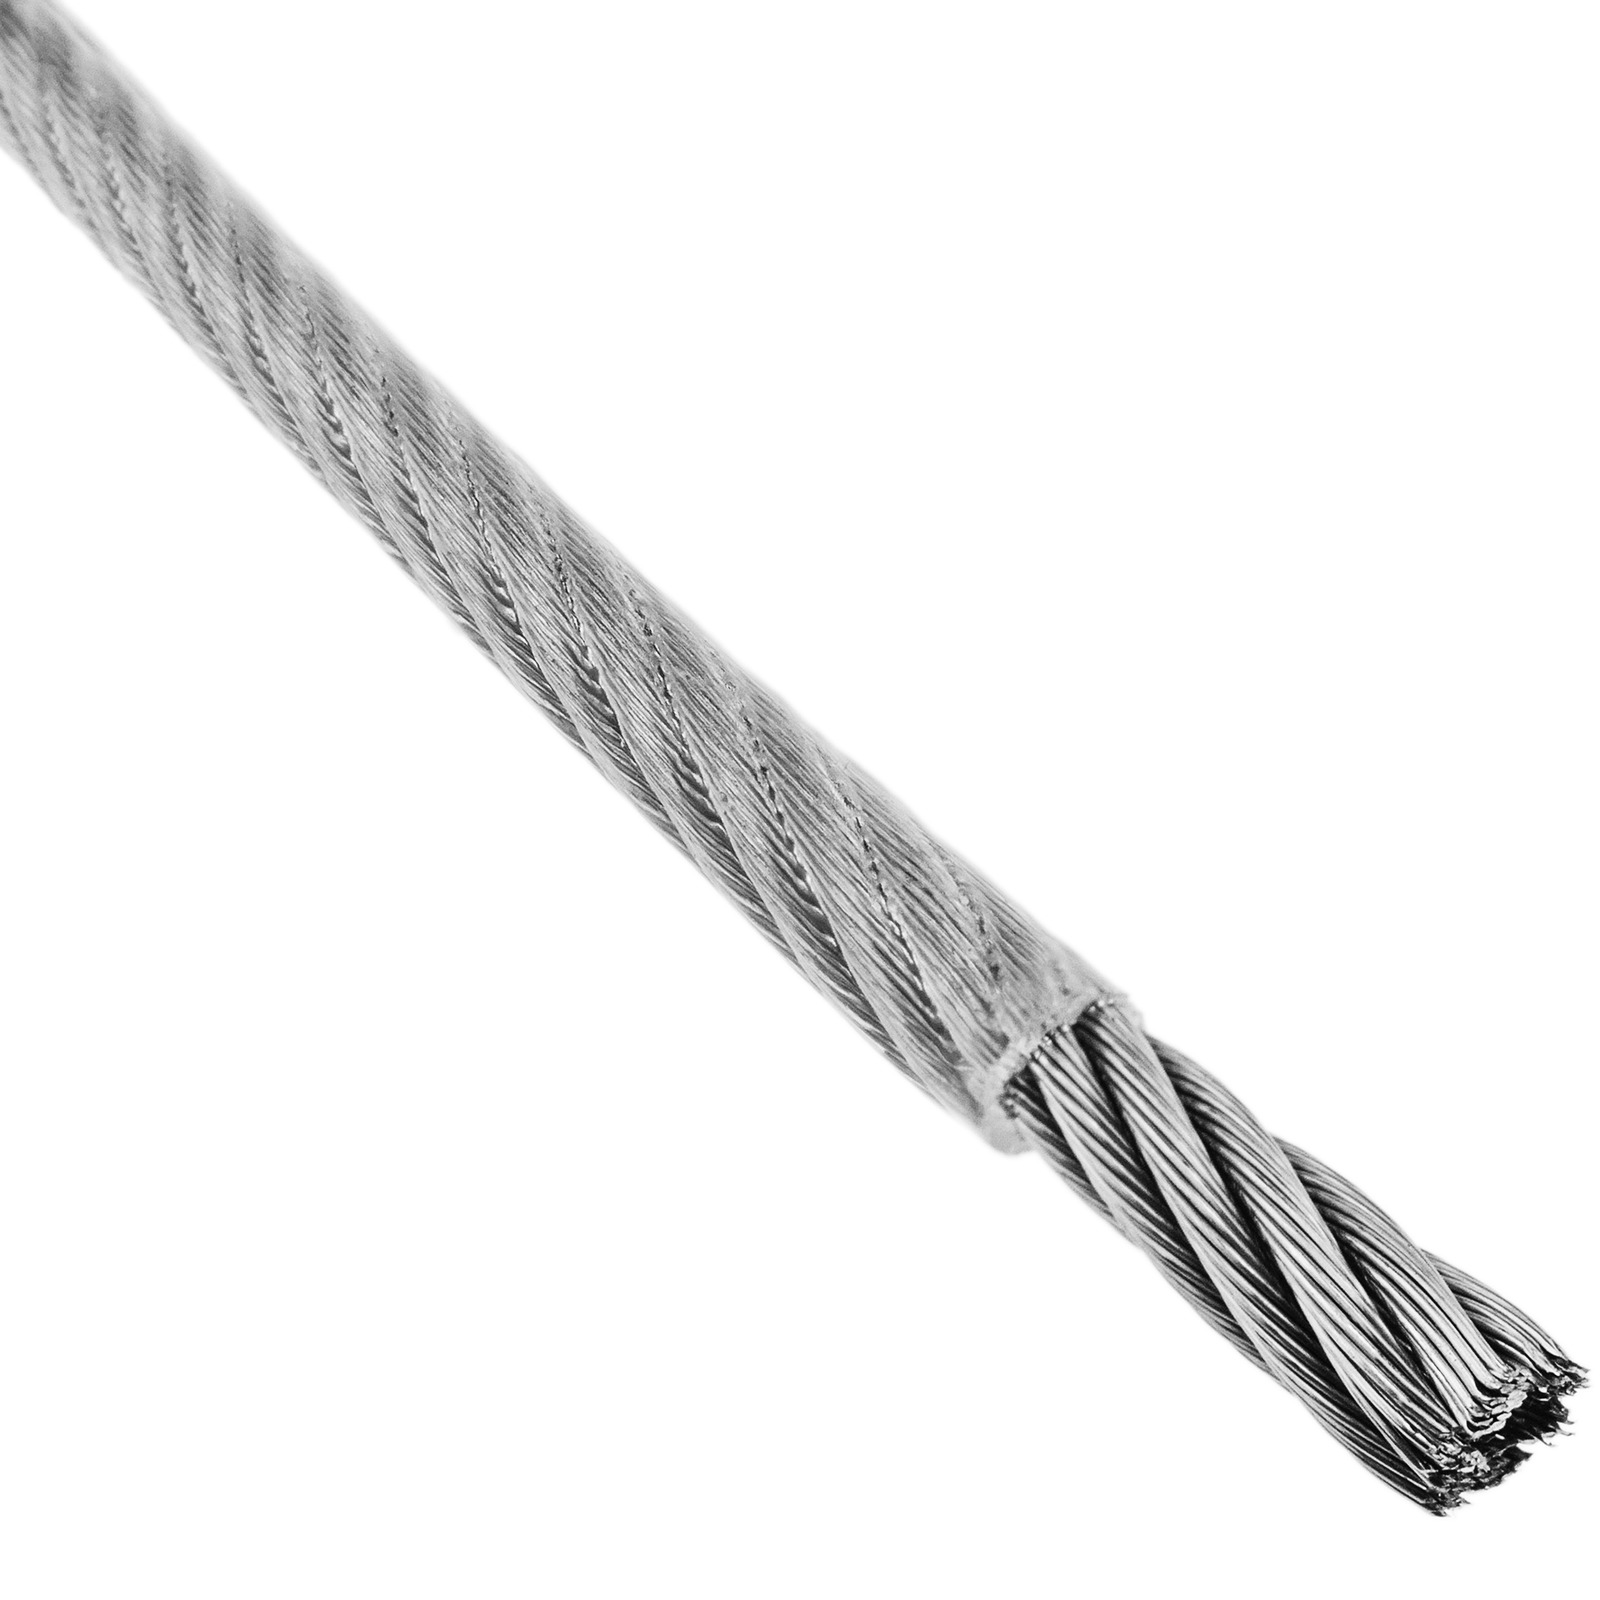 Cable de acero inoxidable 7x19 de 6,0 mm. Bobina de 100 m....